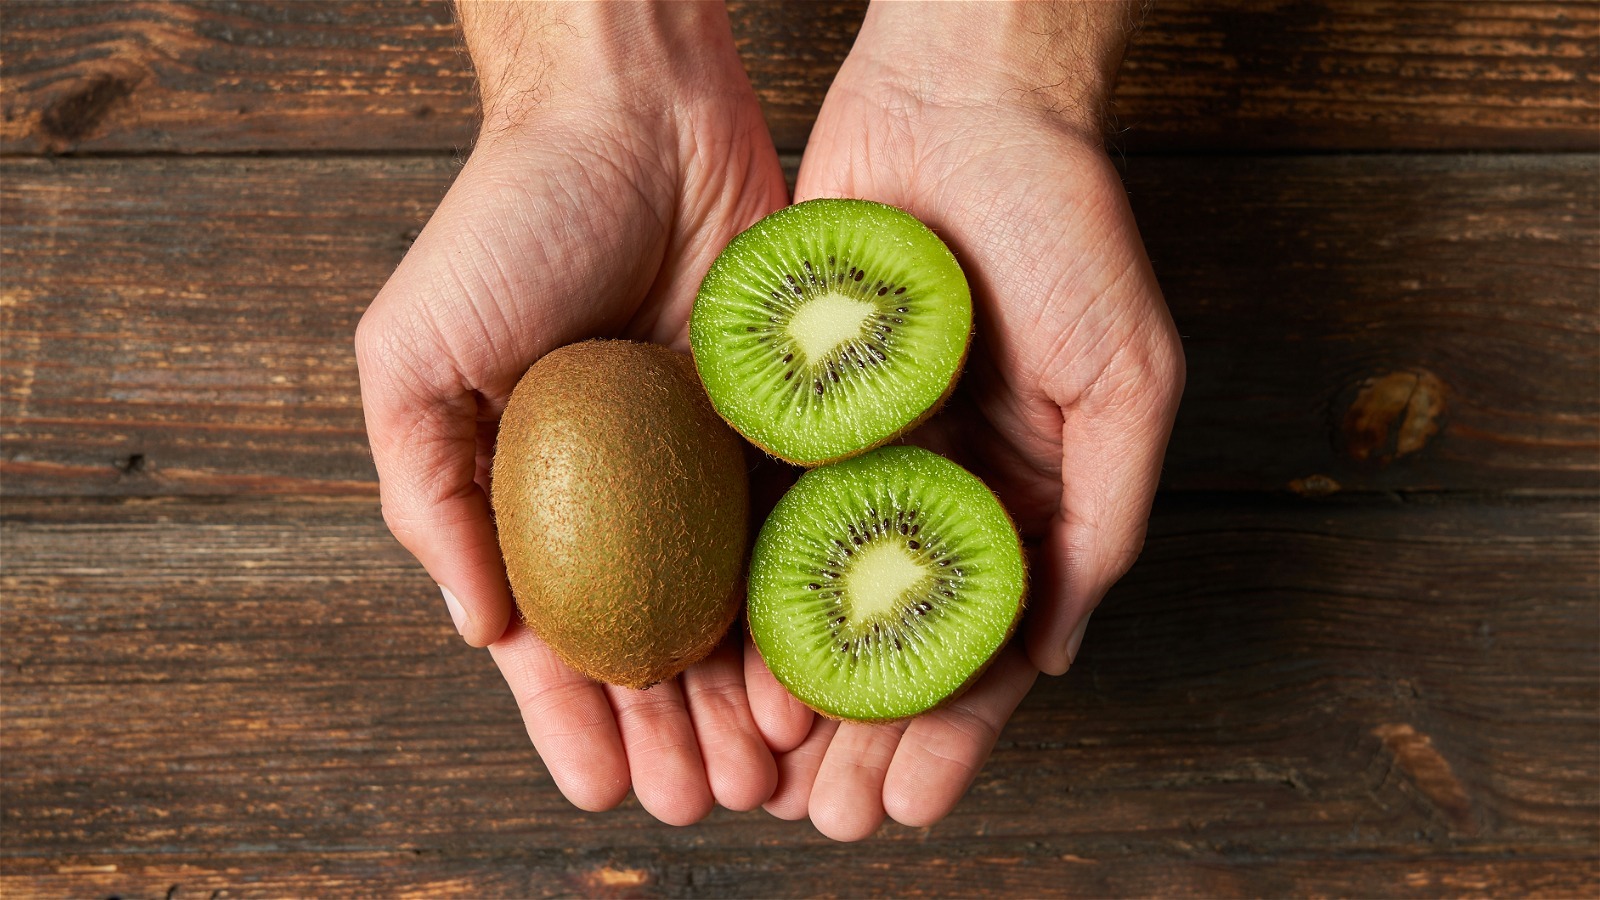 Source Newest/Kitchen tool kiwi peeler fruit peeler / kiwi fruit